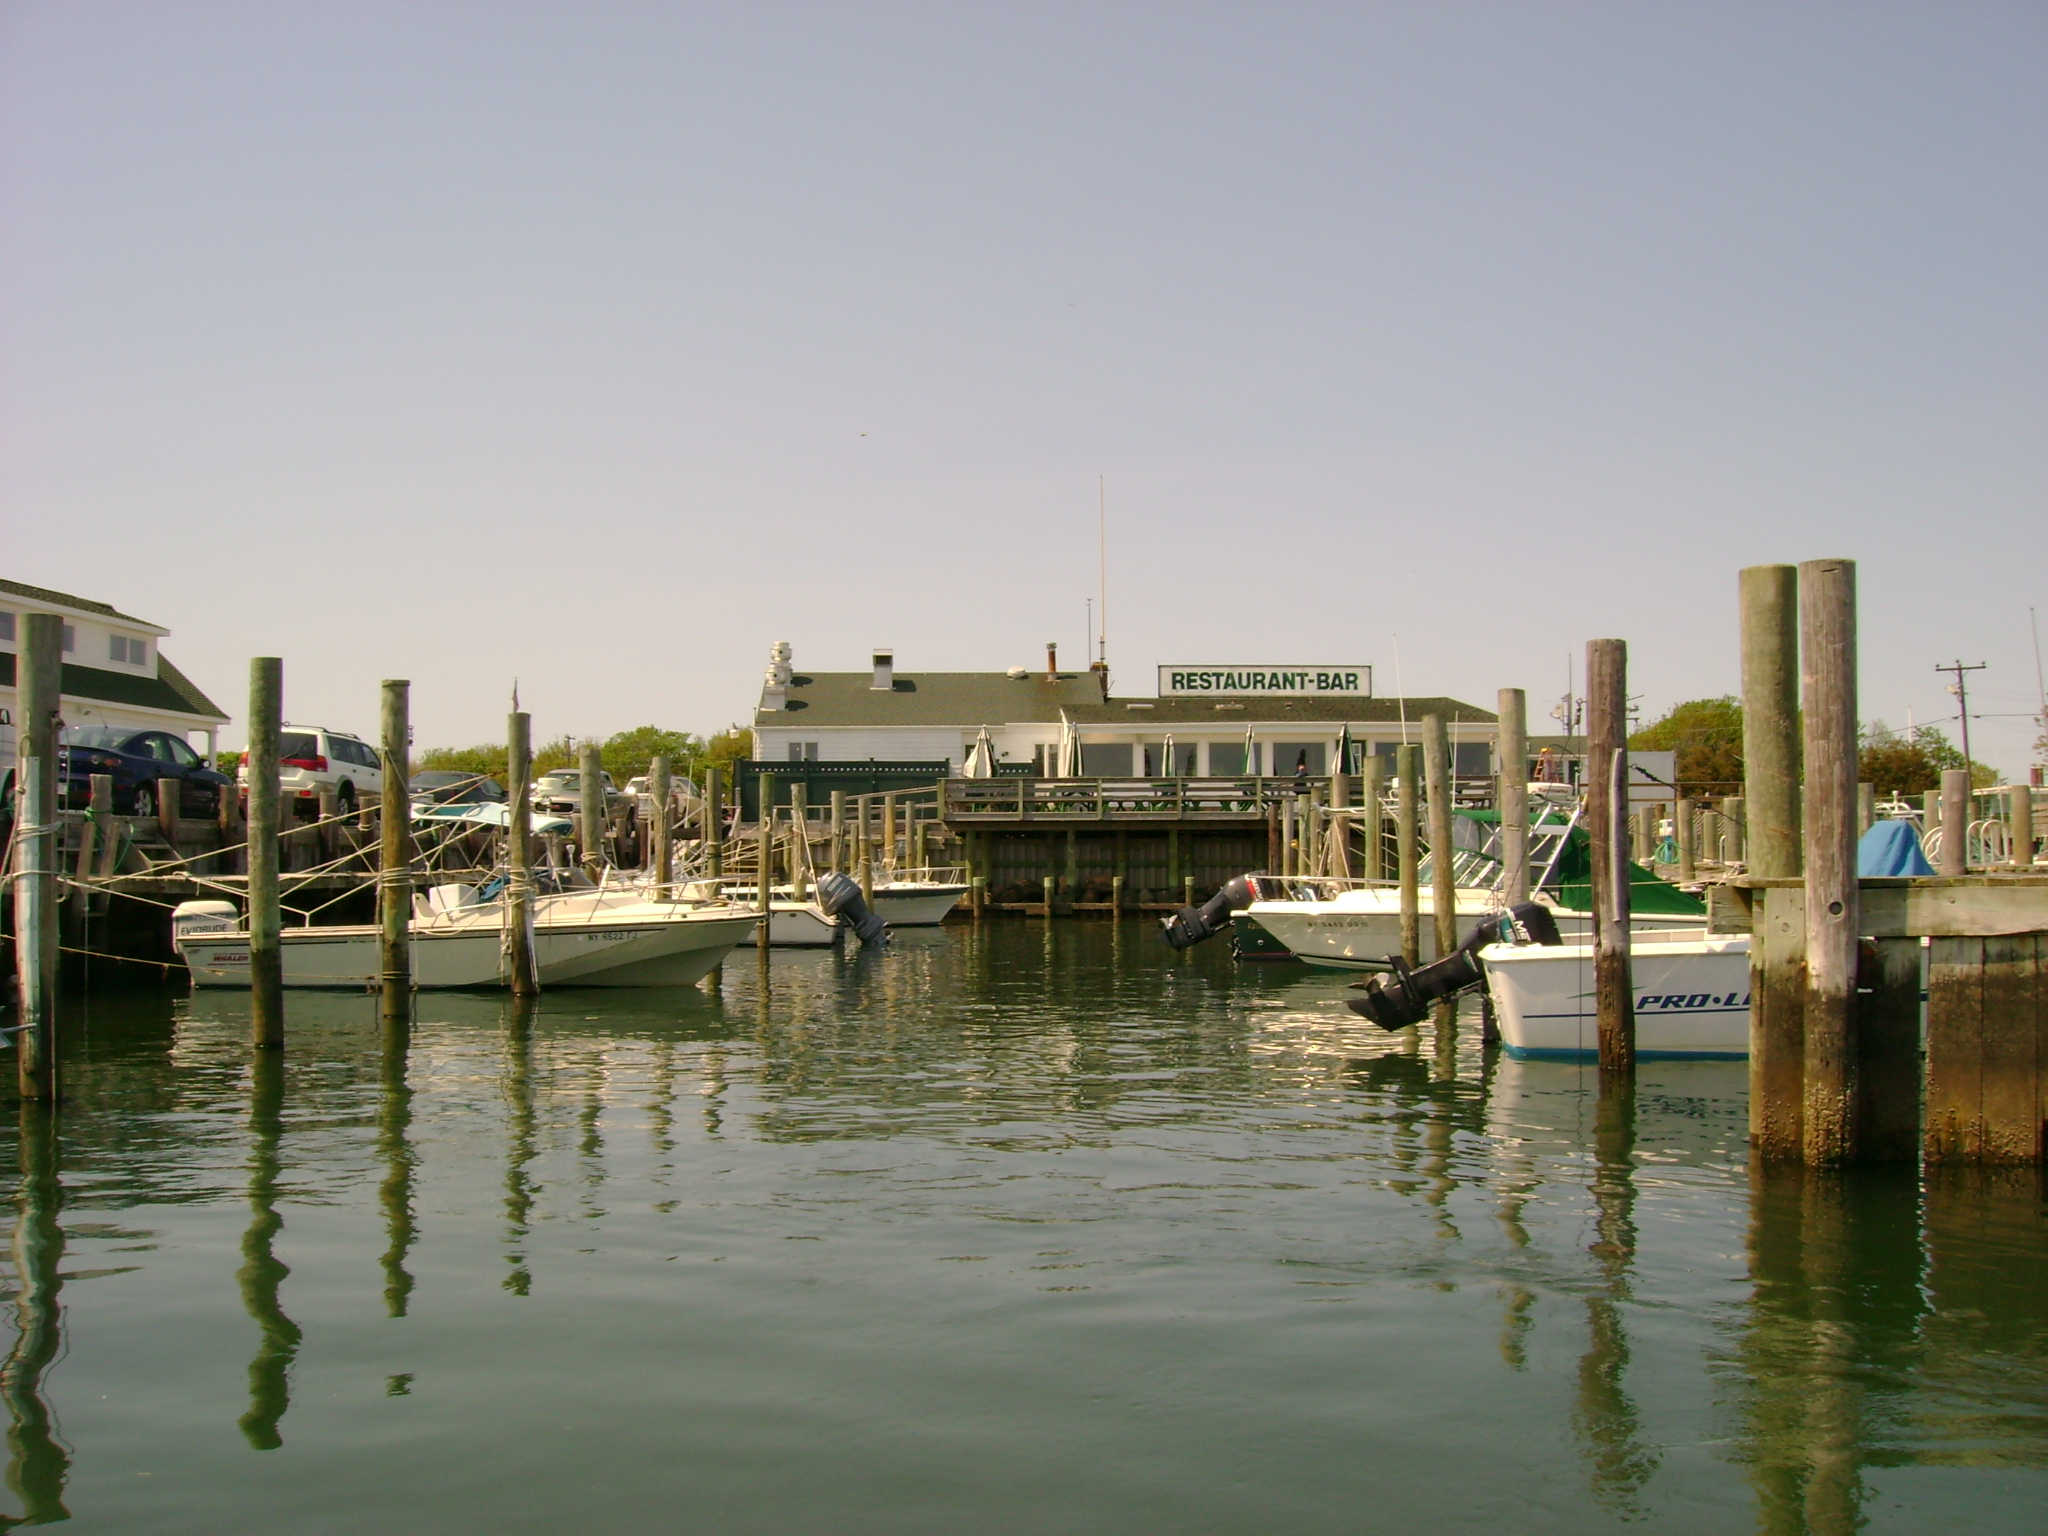 Duryea's Orient Point - Long Island Sound - New York Marina - Marinalife